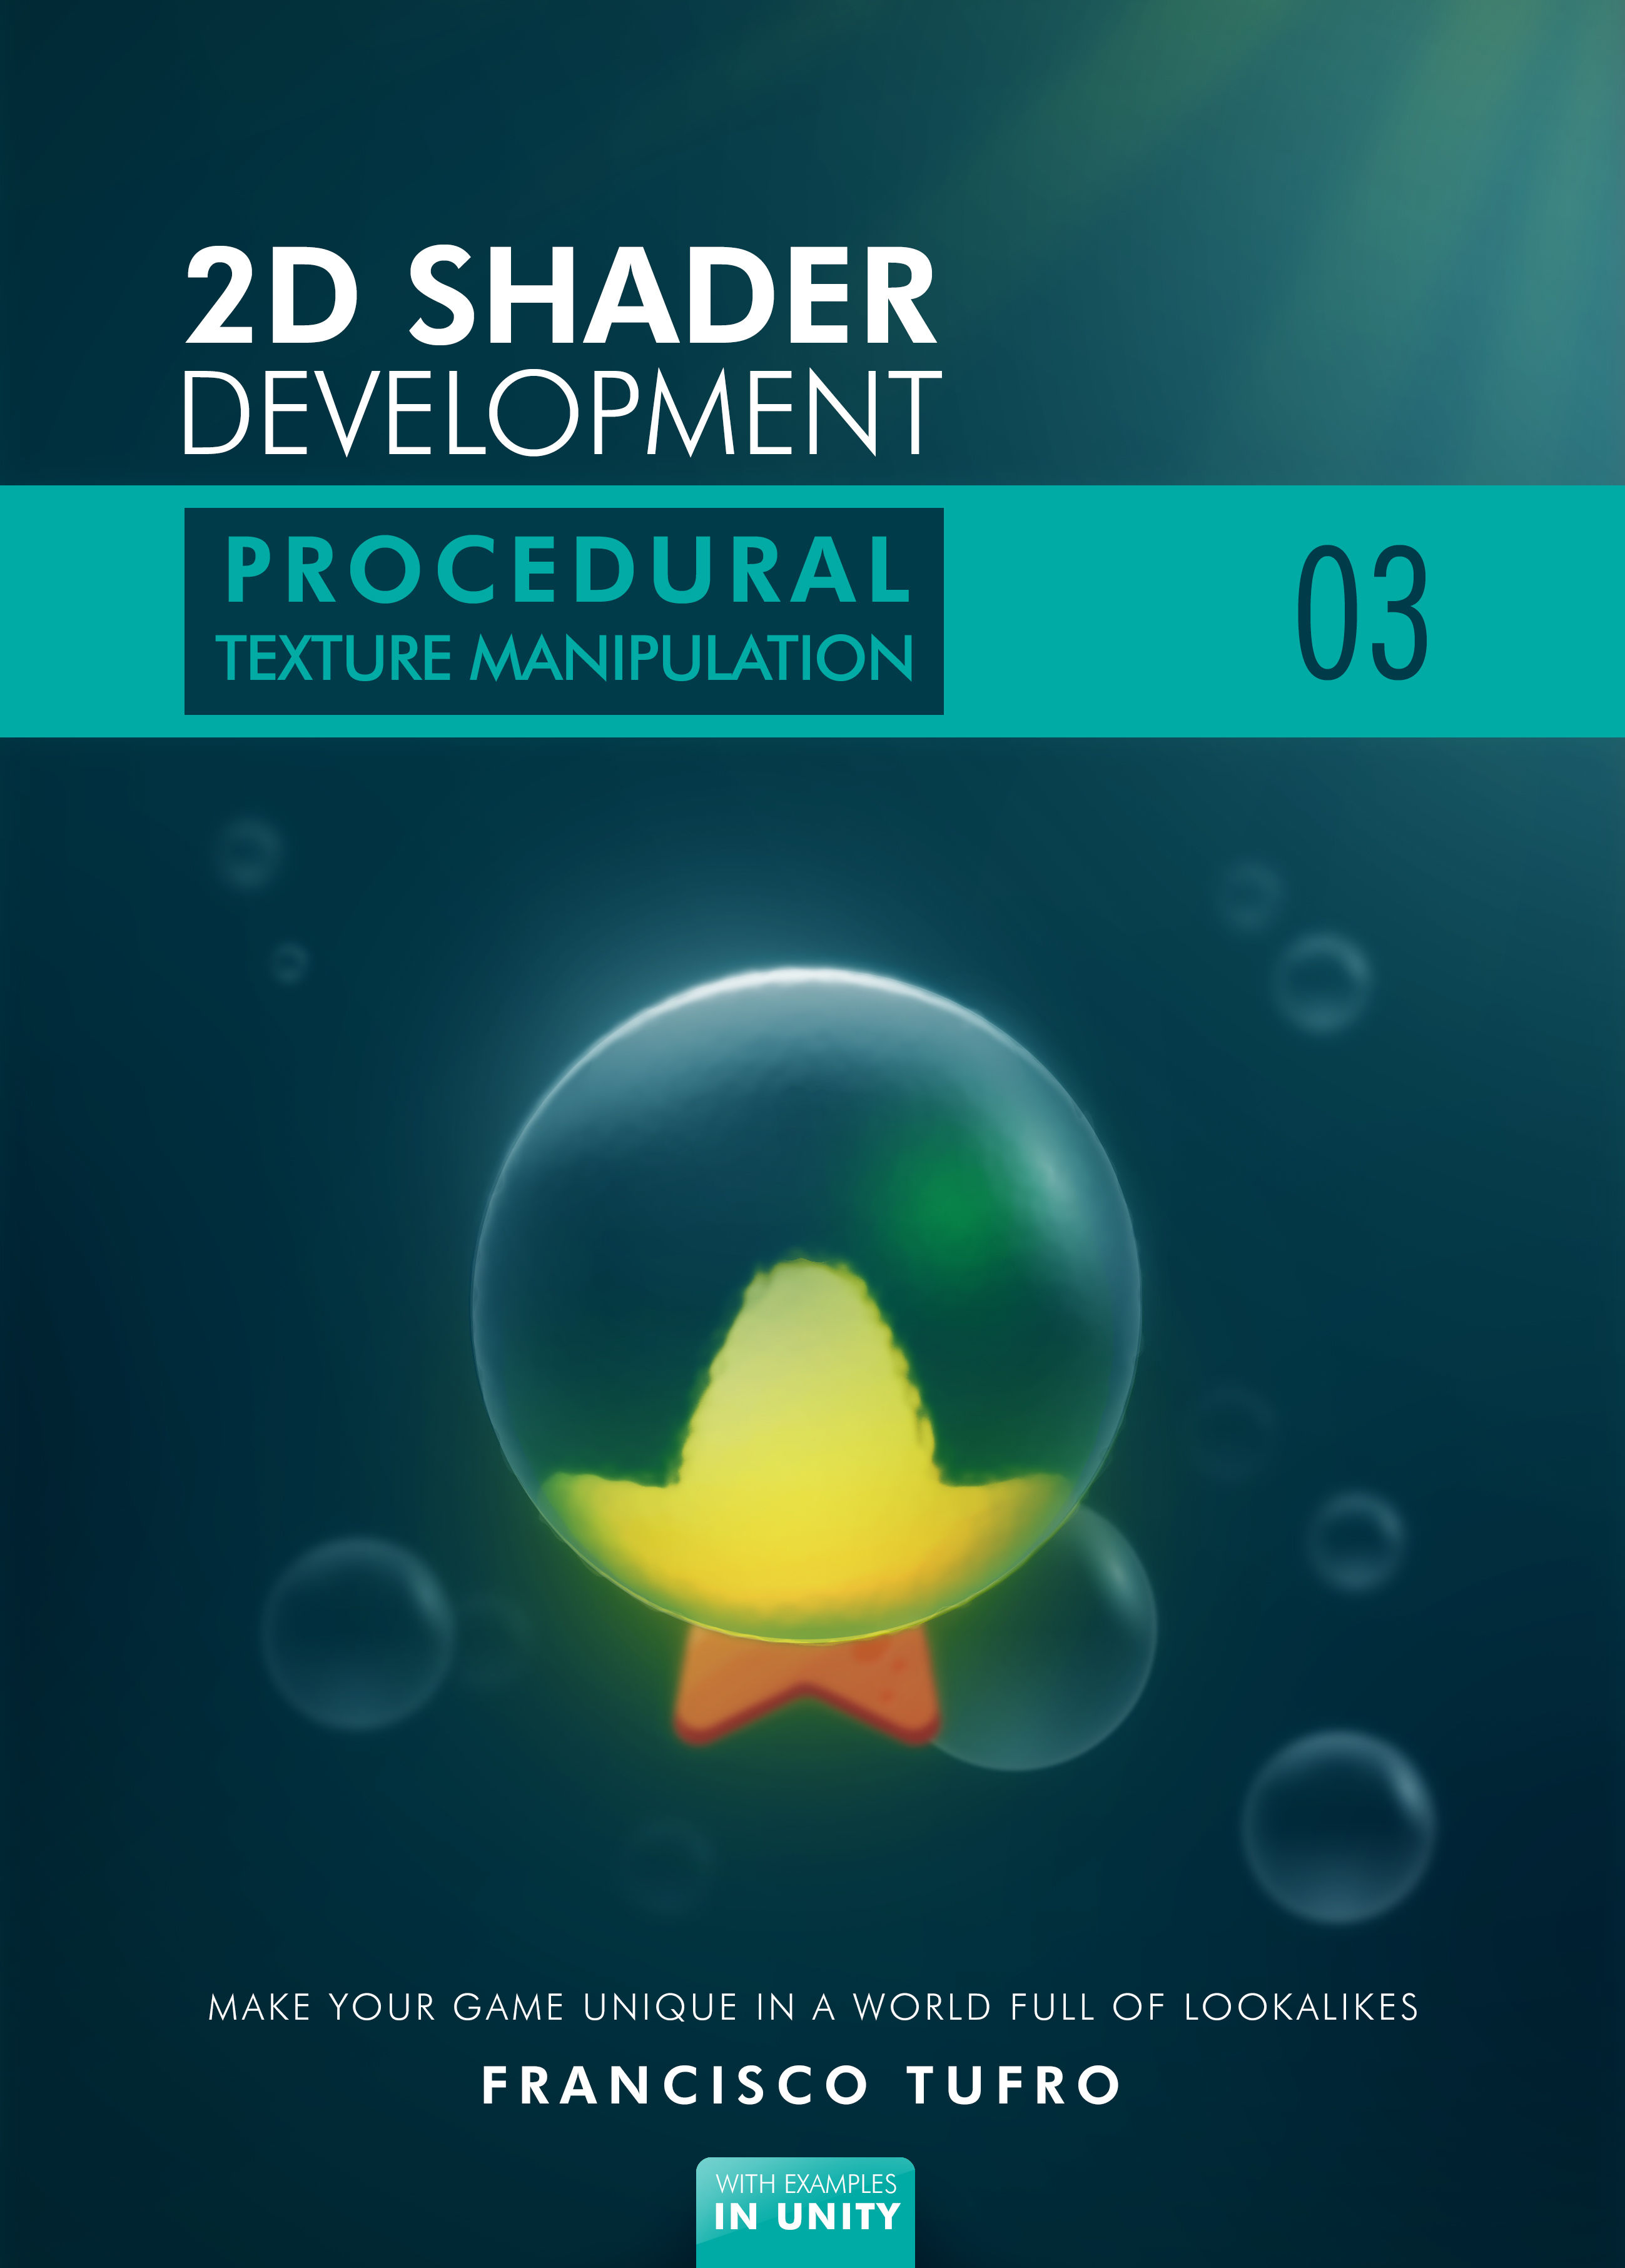 2D Shader Development Third book is out: Procedural Texture Manipulation